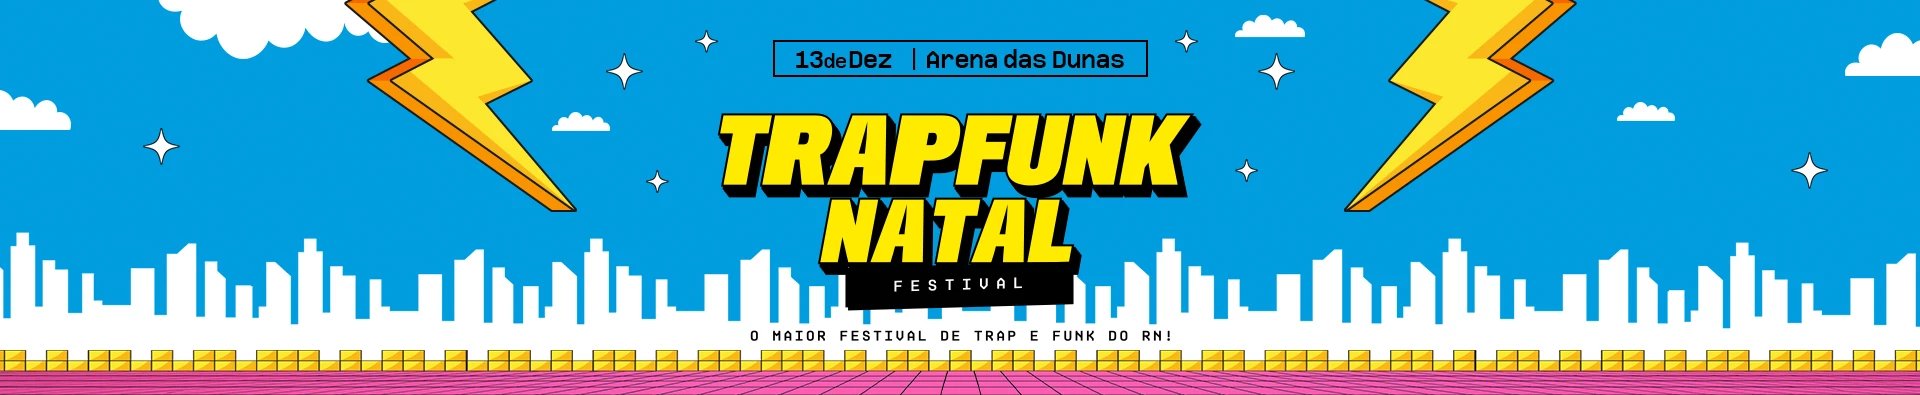 Trapfunk Natal Festival